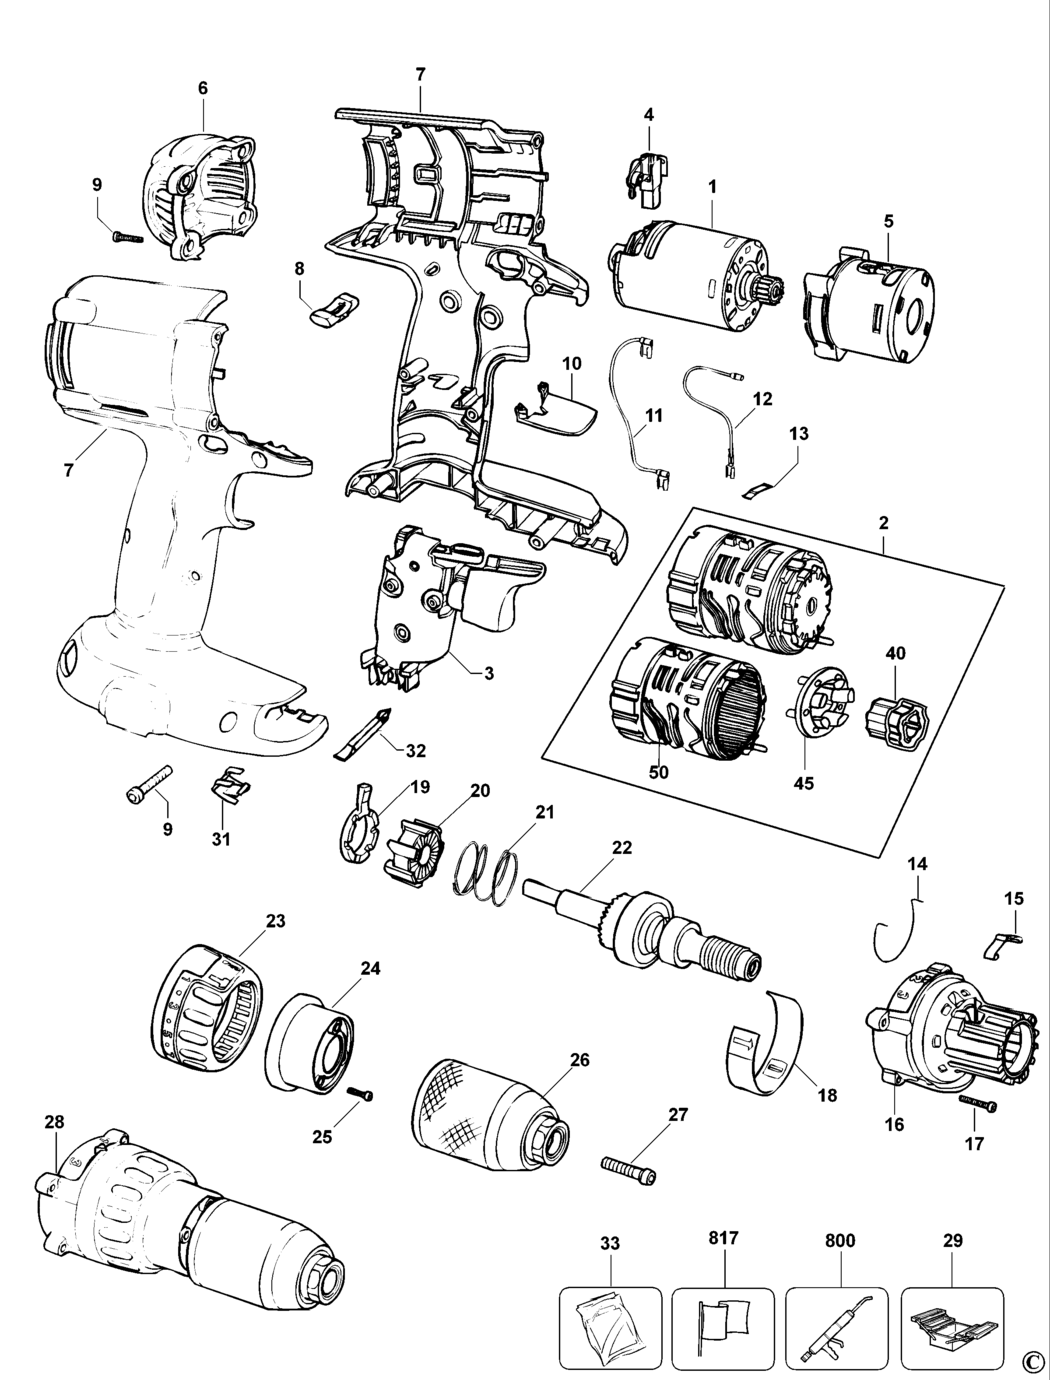 Dewalt DW981 Type 11 Cordless Drill Spare Parts